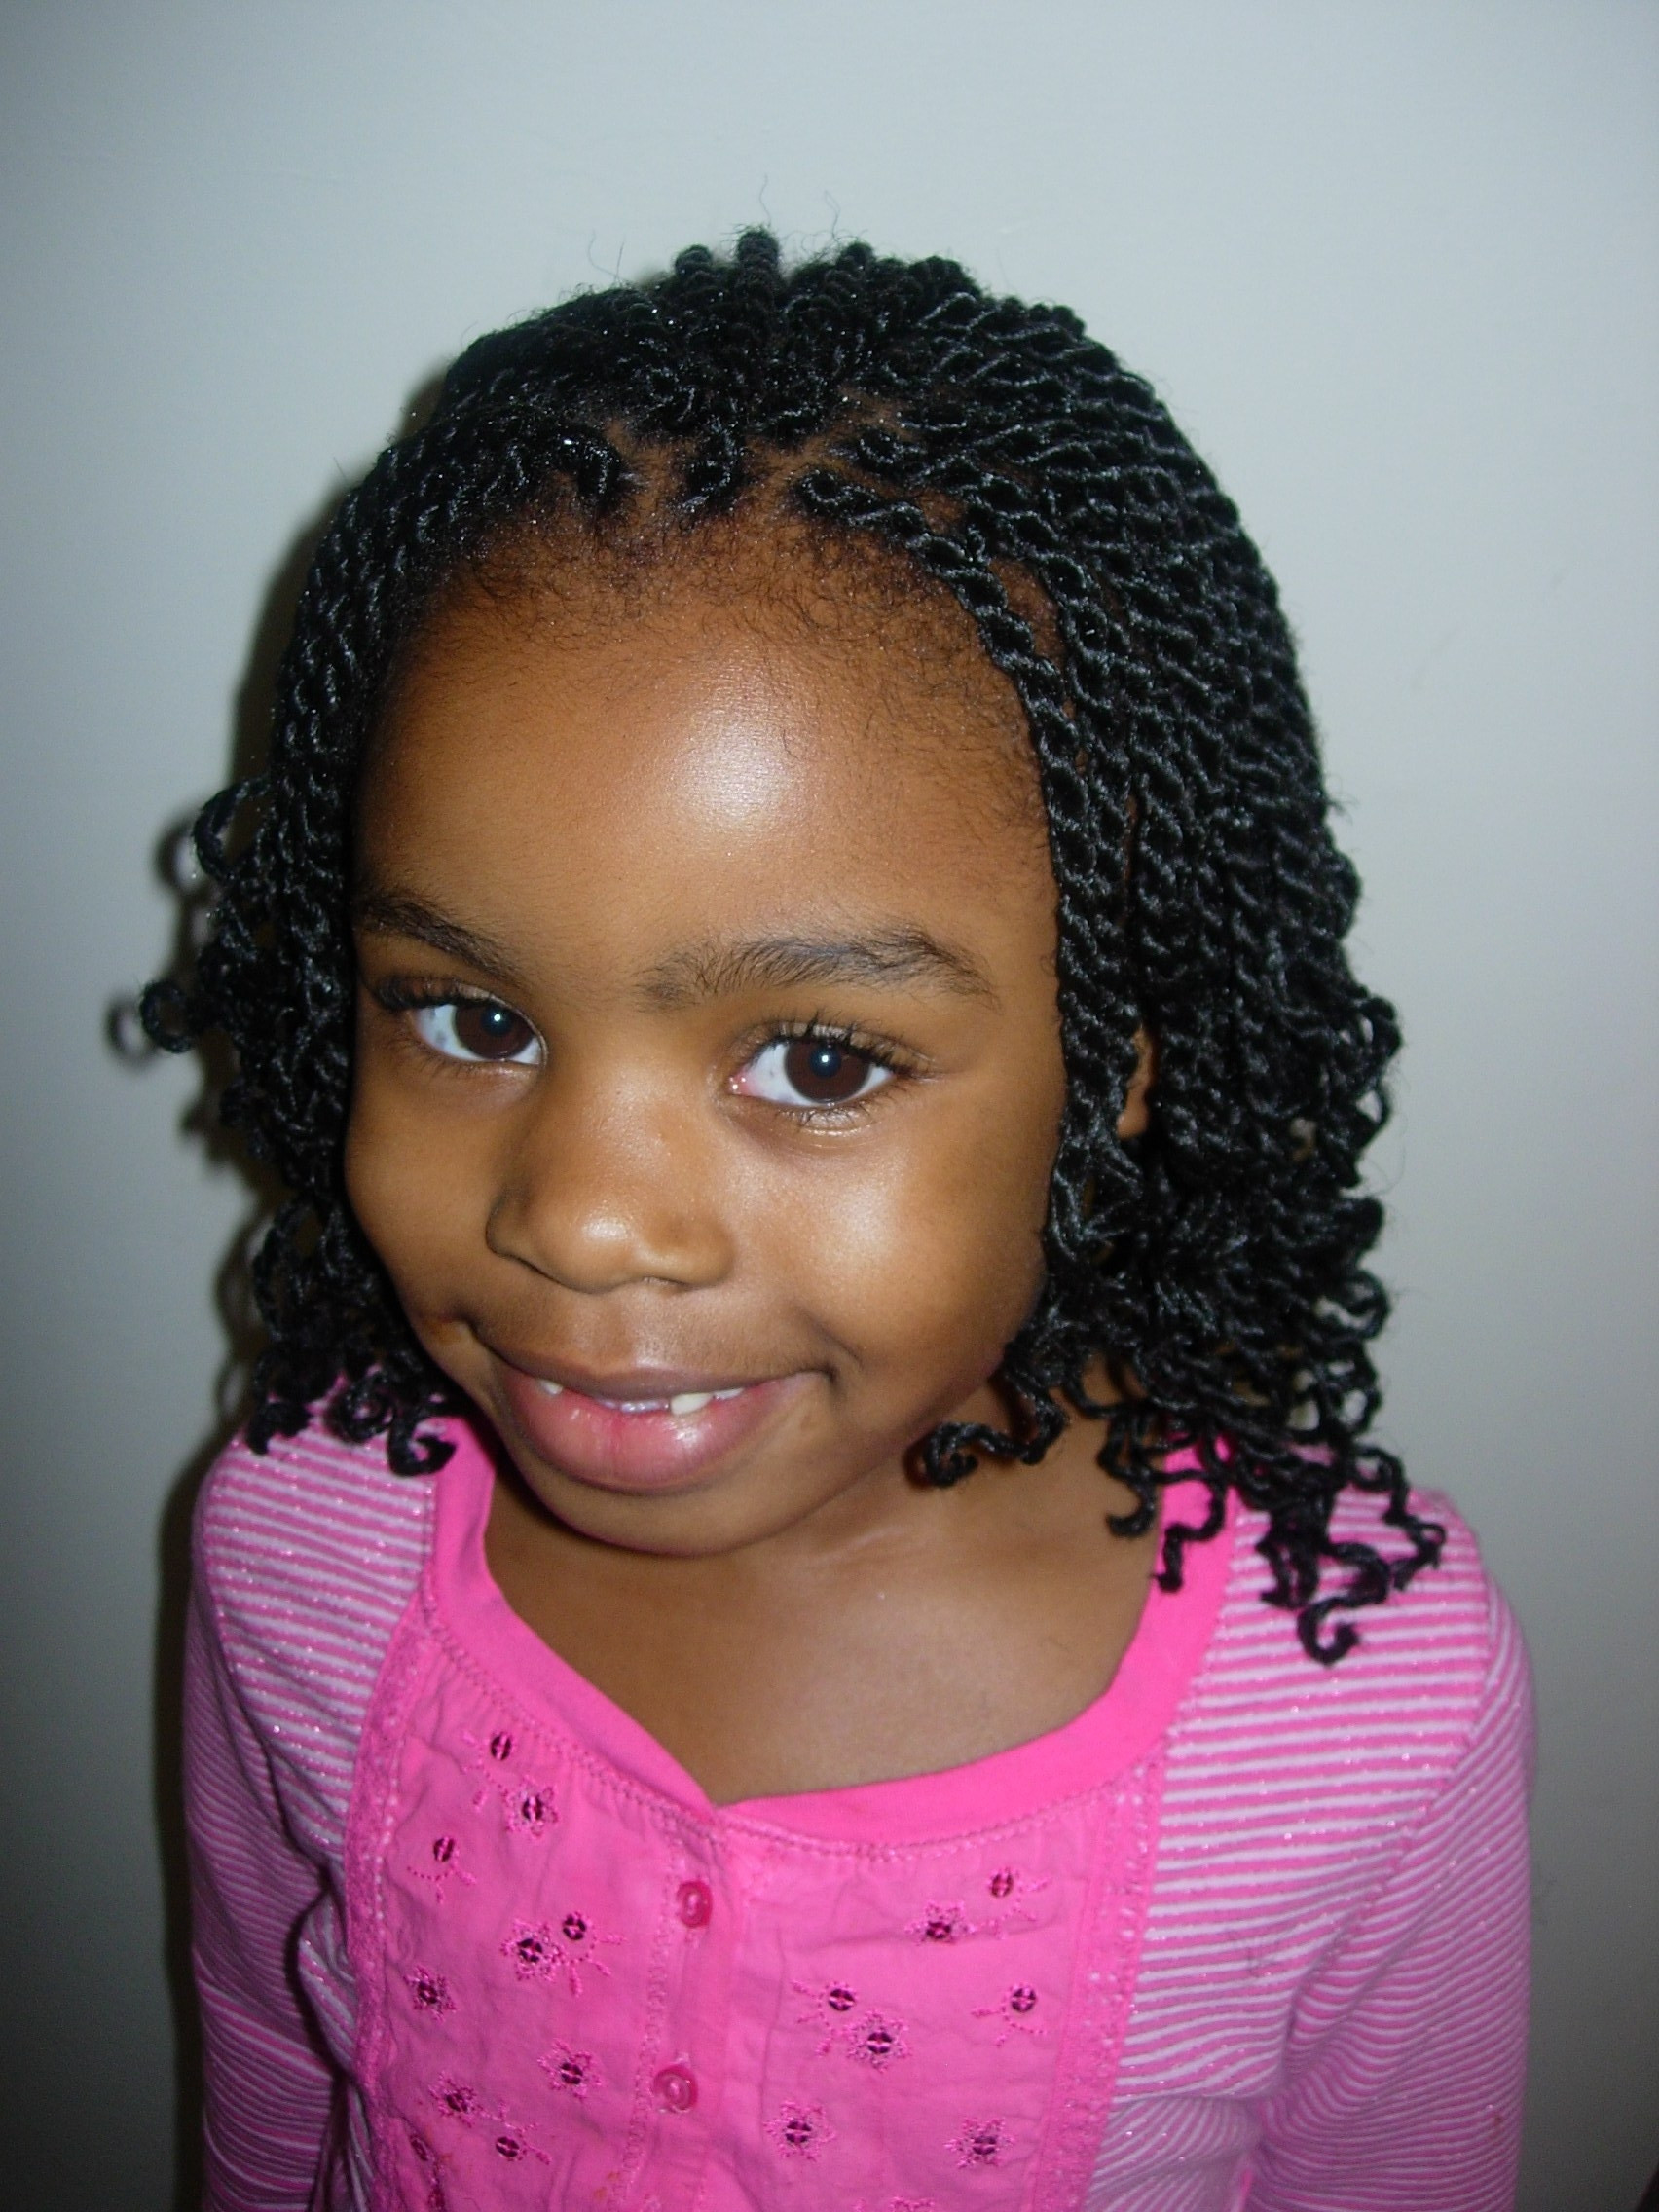 Hairstyles For Kids Girls Black
 9 Best Hairstyles for Black Little Girls